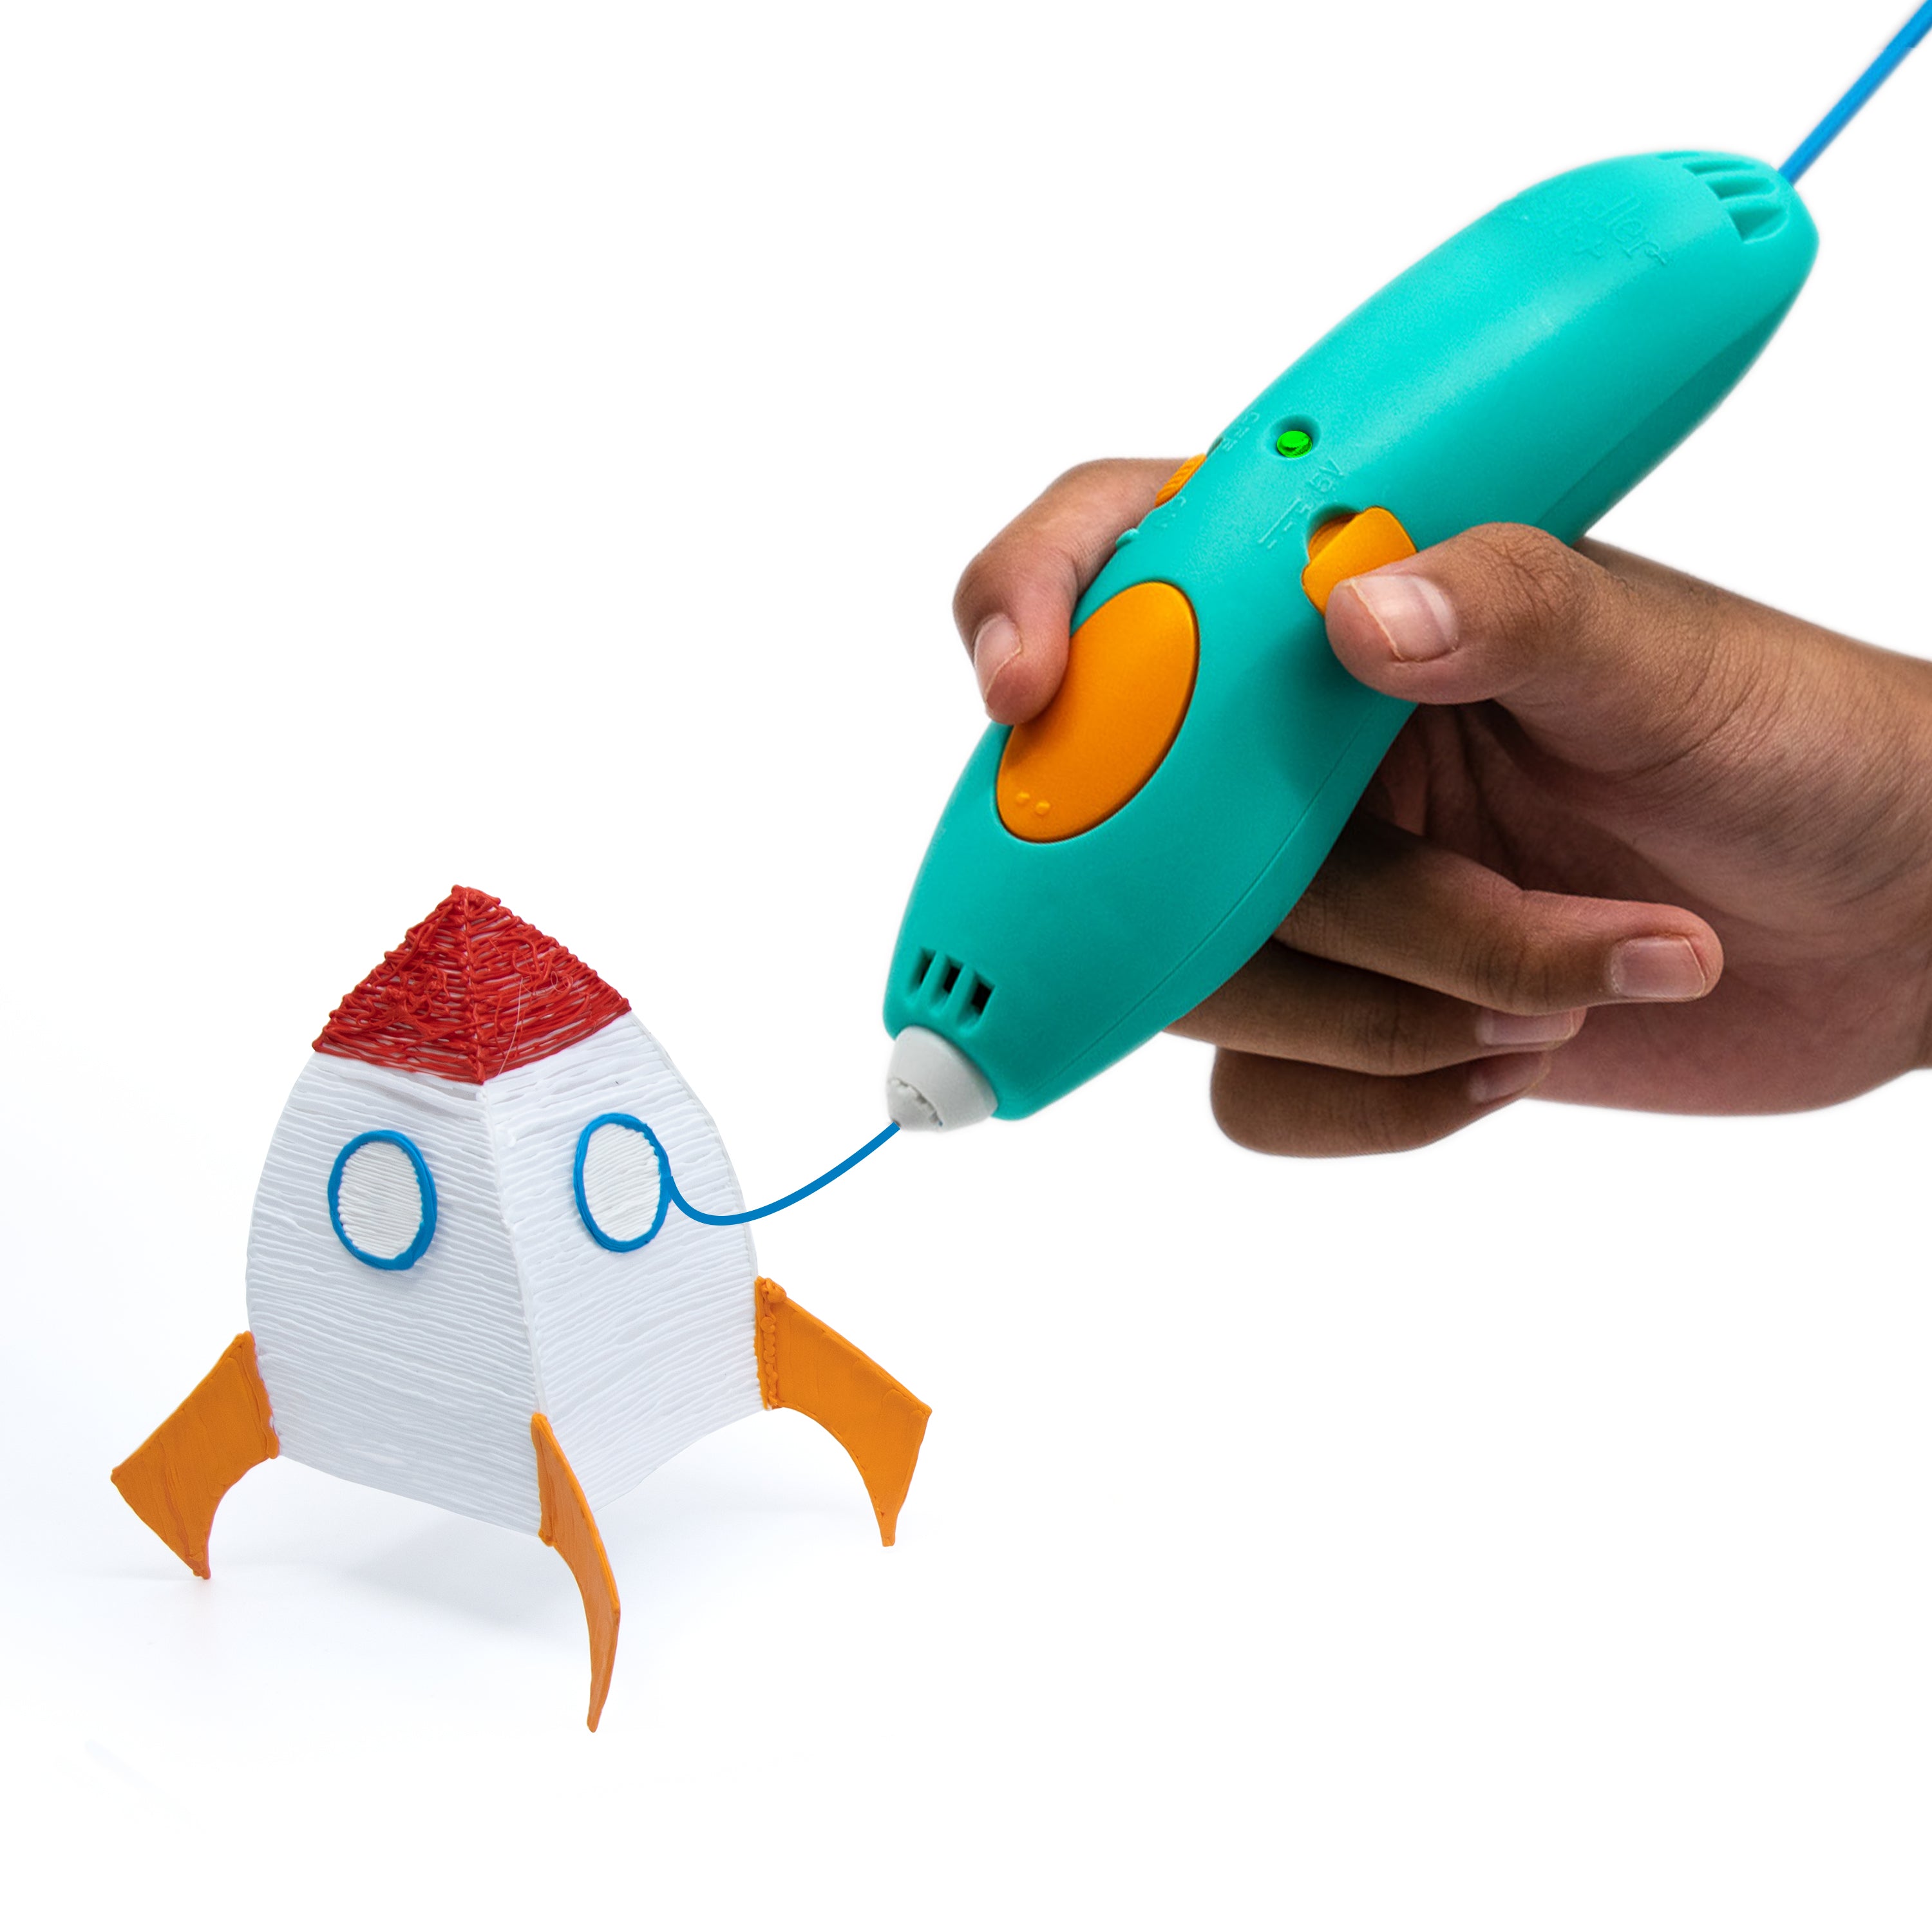 3Doodler Start+ 3-D Printing Pen Set for Kids – STEAMbright